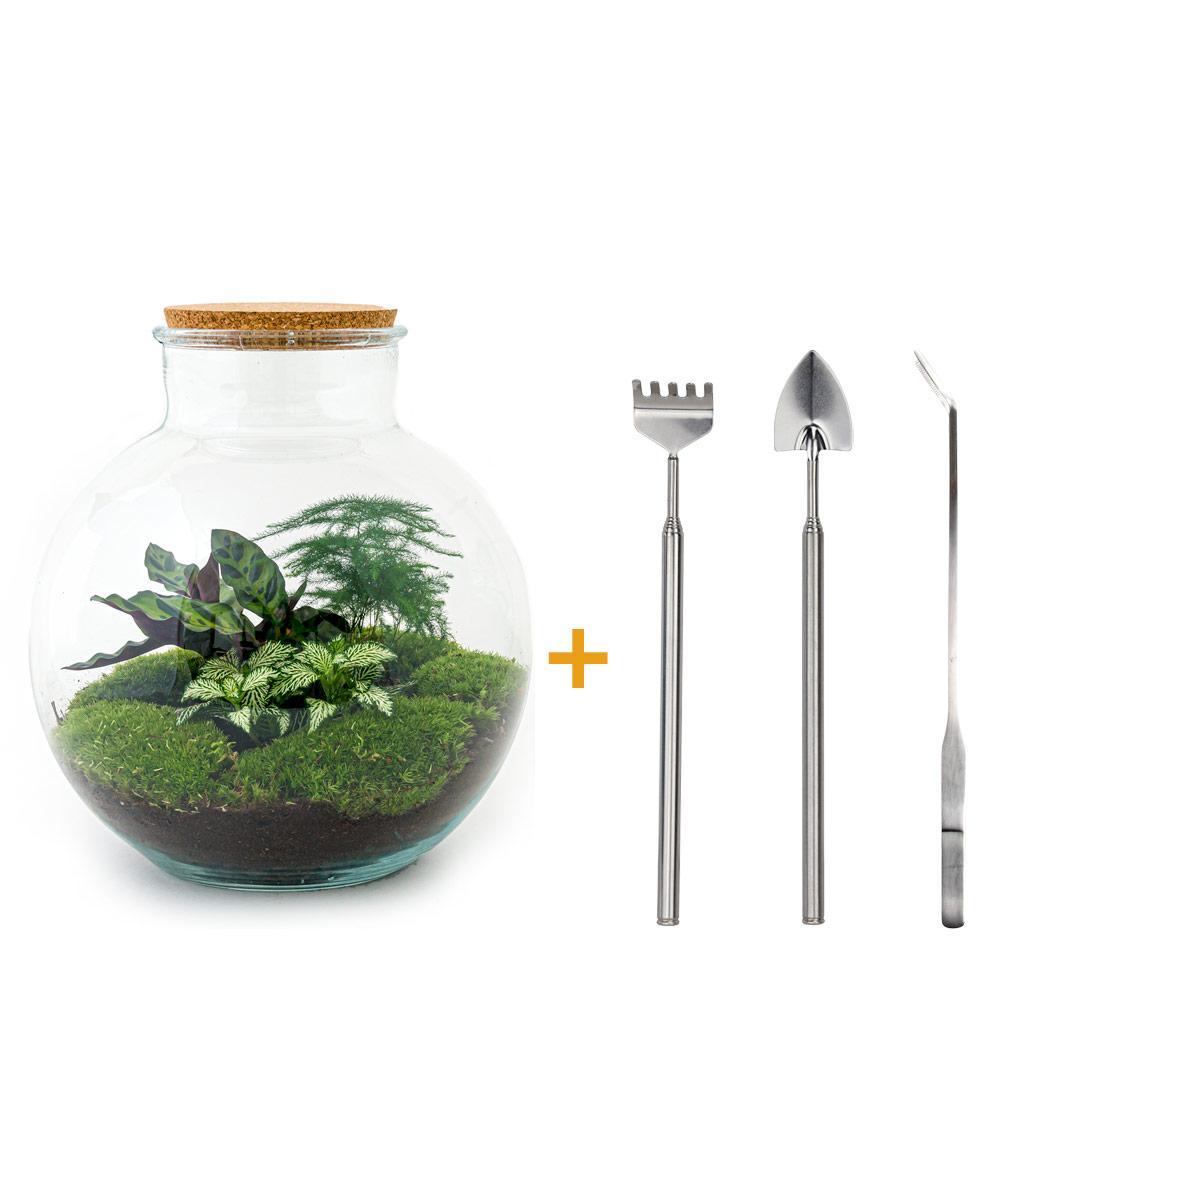 DIY terrarium - Bolder Bob - ↑ 30 cm + Rake + Shovel + Tweezer